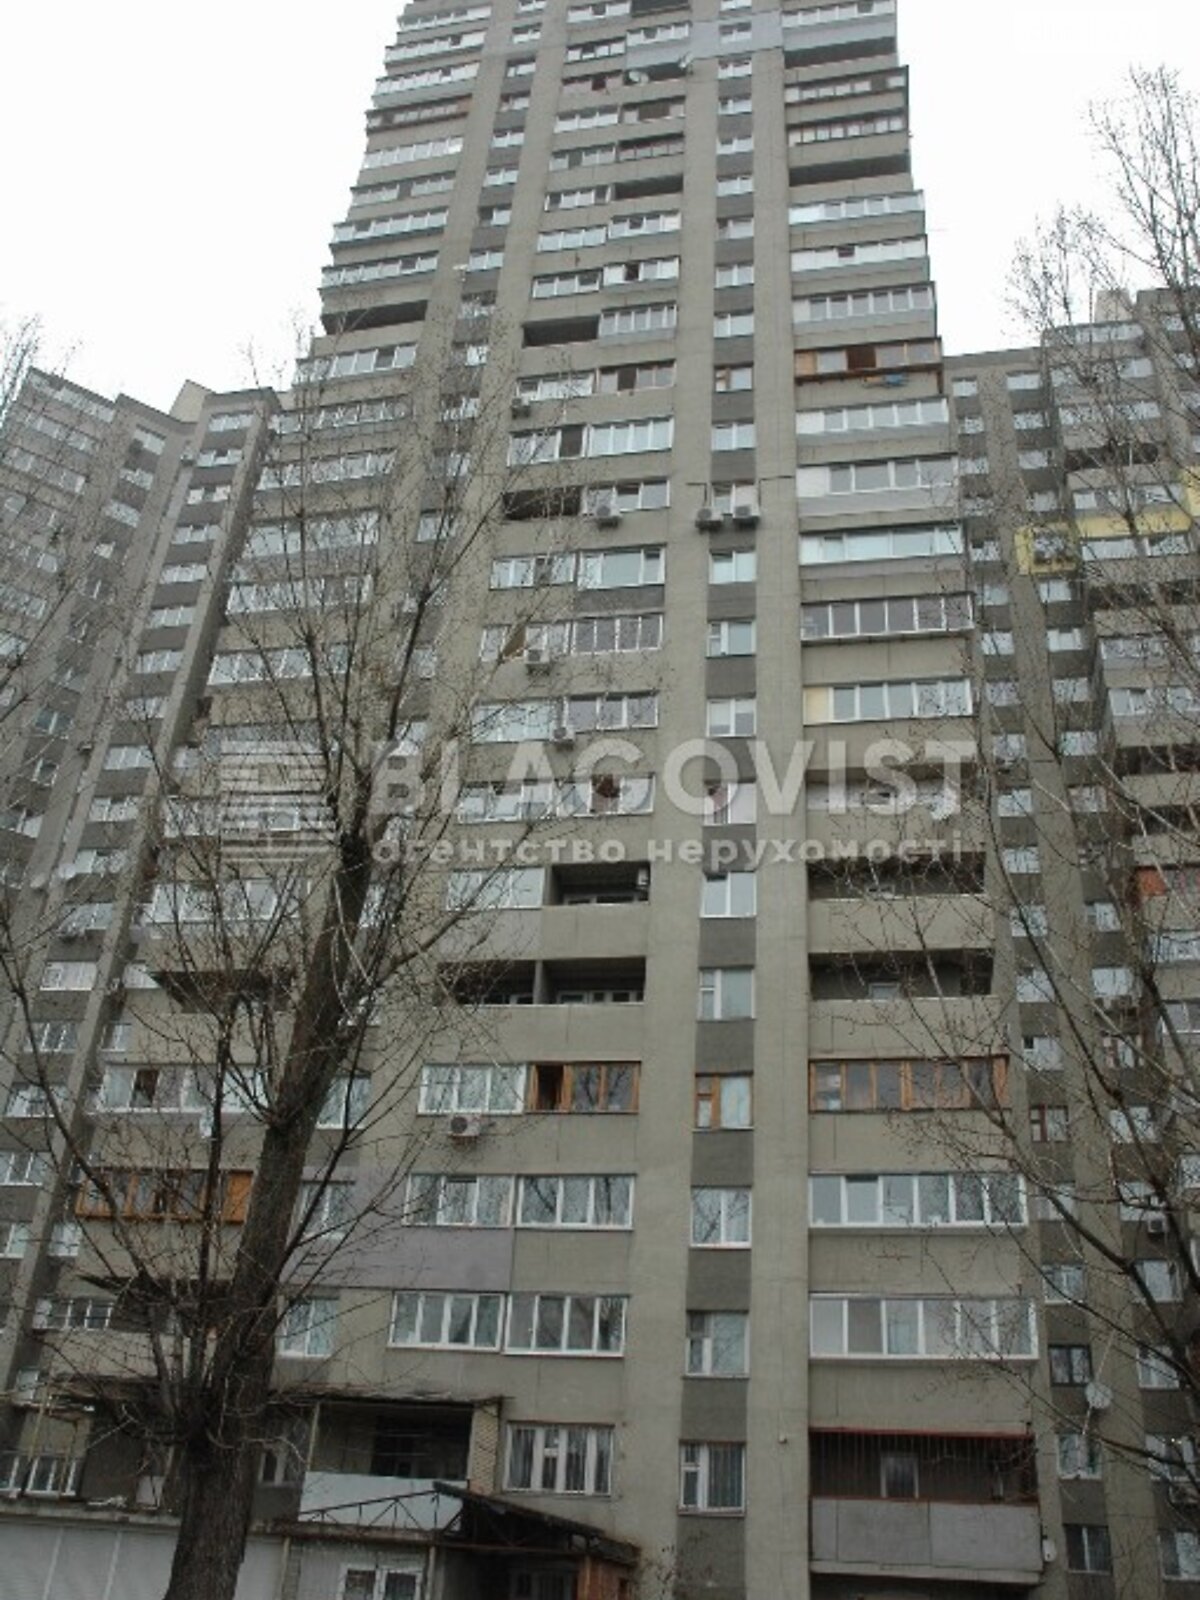 Продажа трехкомнатной квартиры в Киеве, на пл. Святошинская 1, район Святошинский фото 1